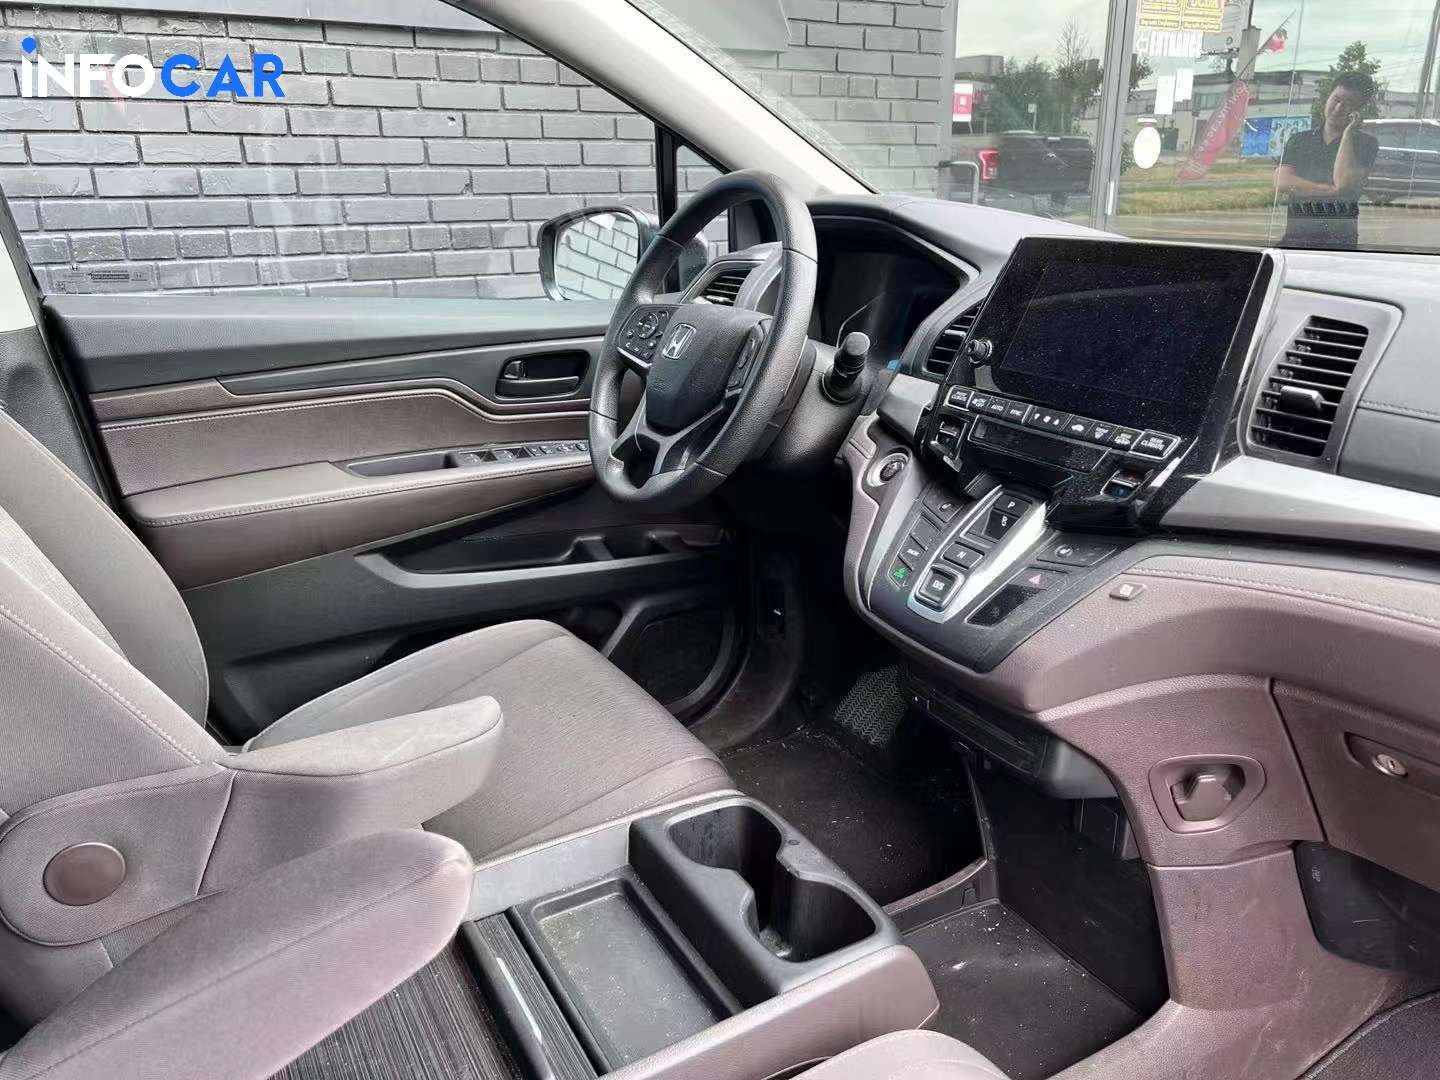 2019 Honda Odyssey Ex - INFOCAR - Toronto Auto Trading Platform